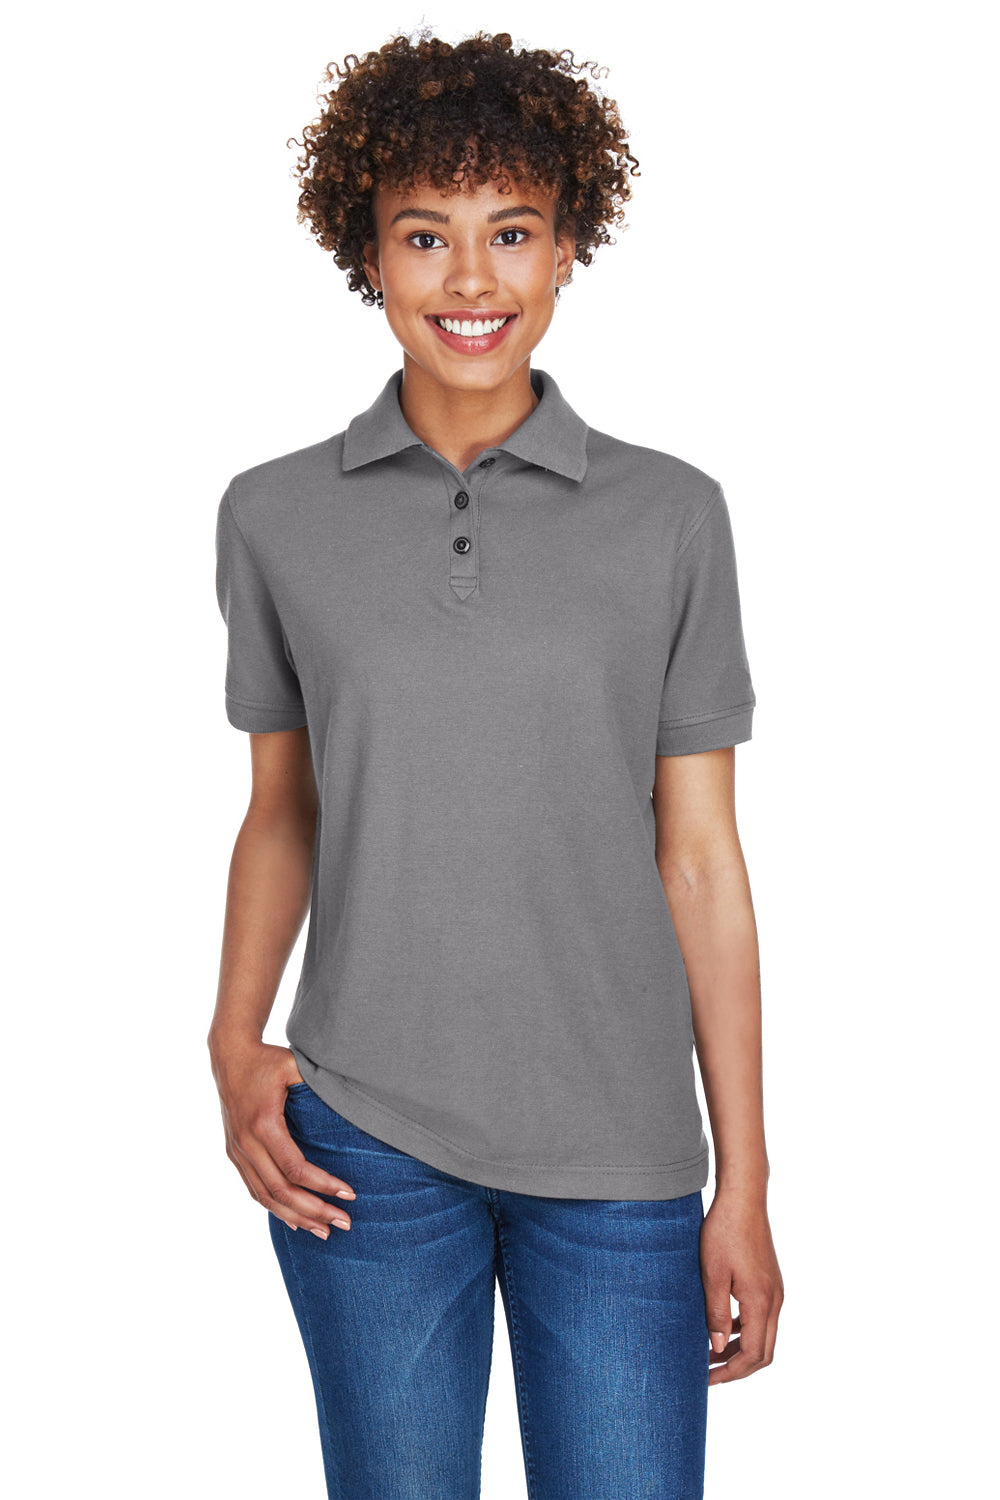 UltraClub 8541 Womens Whisper Short Sleeve Polo Shirt Graphite Grey Front